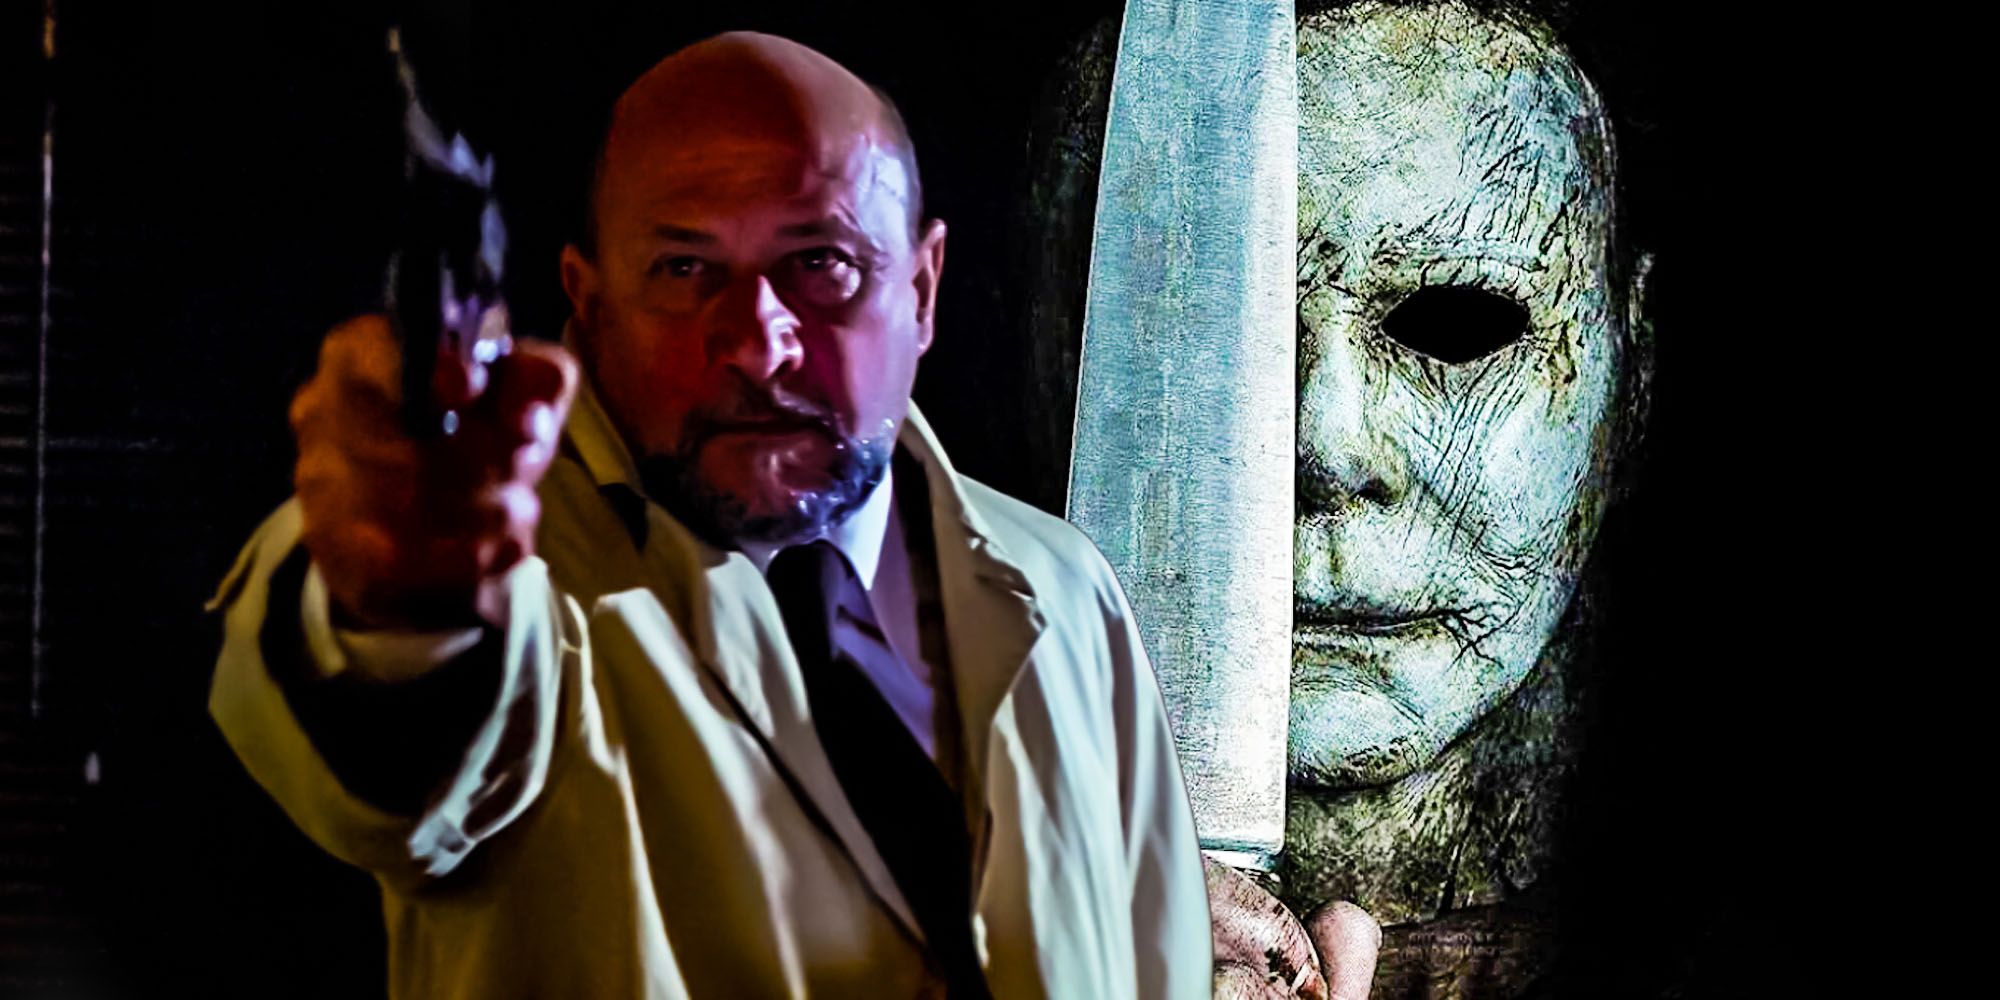 The Unmade Halloween: Asylum presentó a Michael Copycat y al Dr. Loomis Son